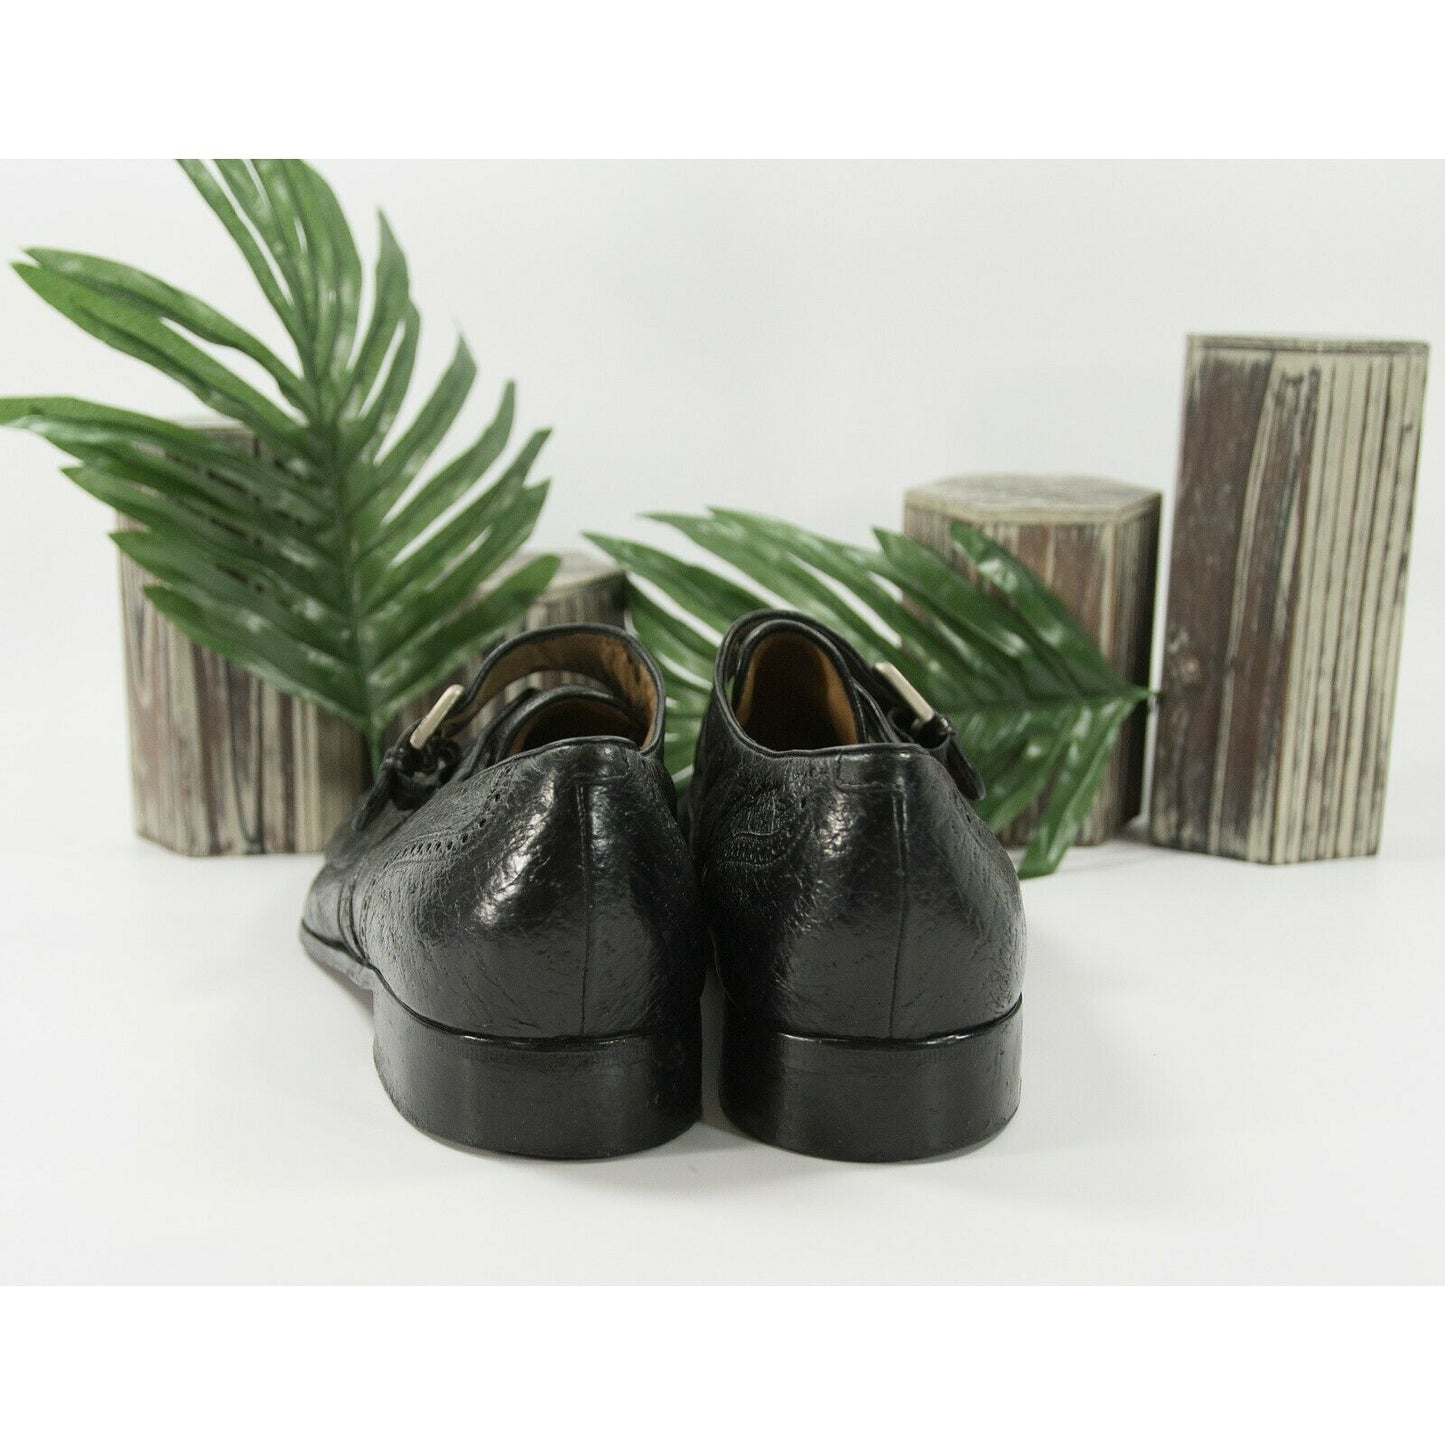 Moreschi Monk Strap Black Leather Oxford Loafer Shoes Size 14